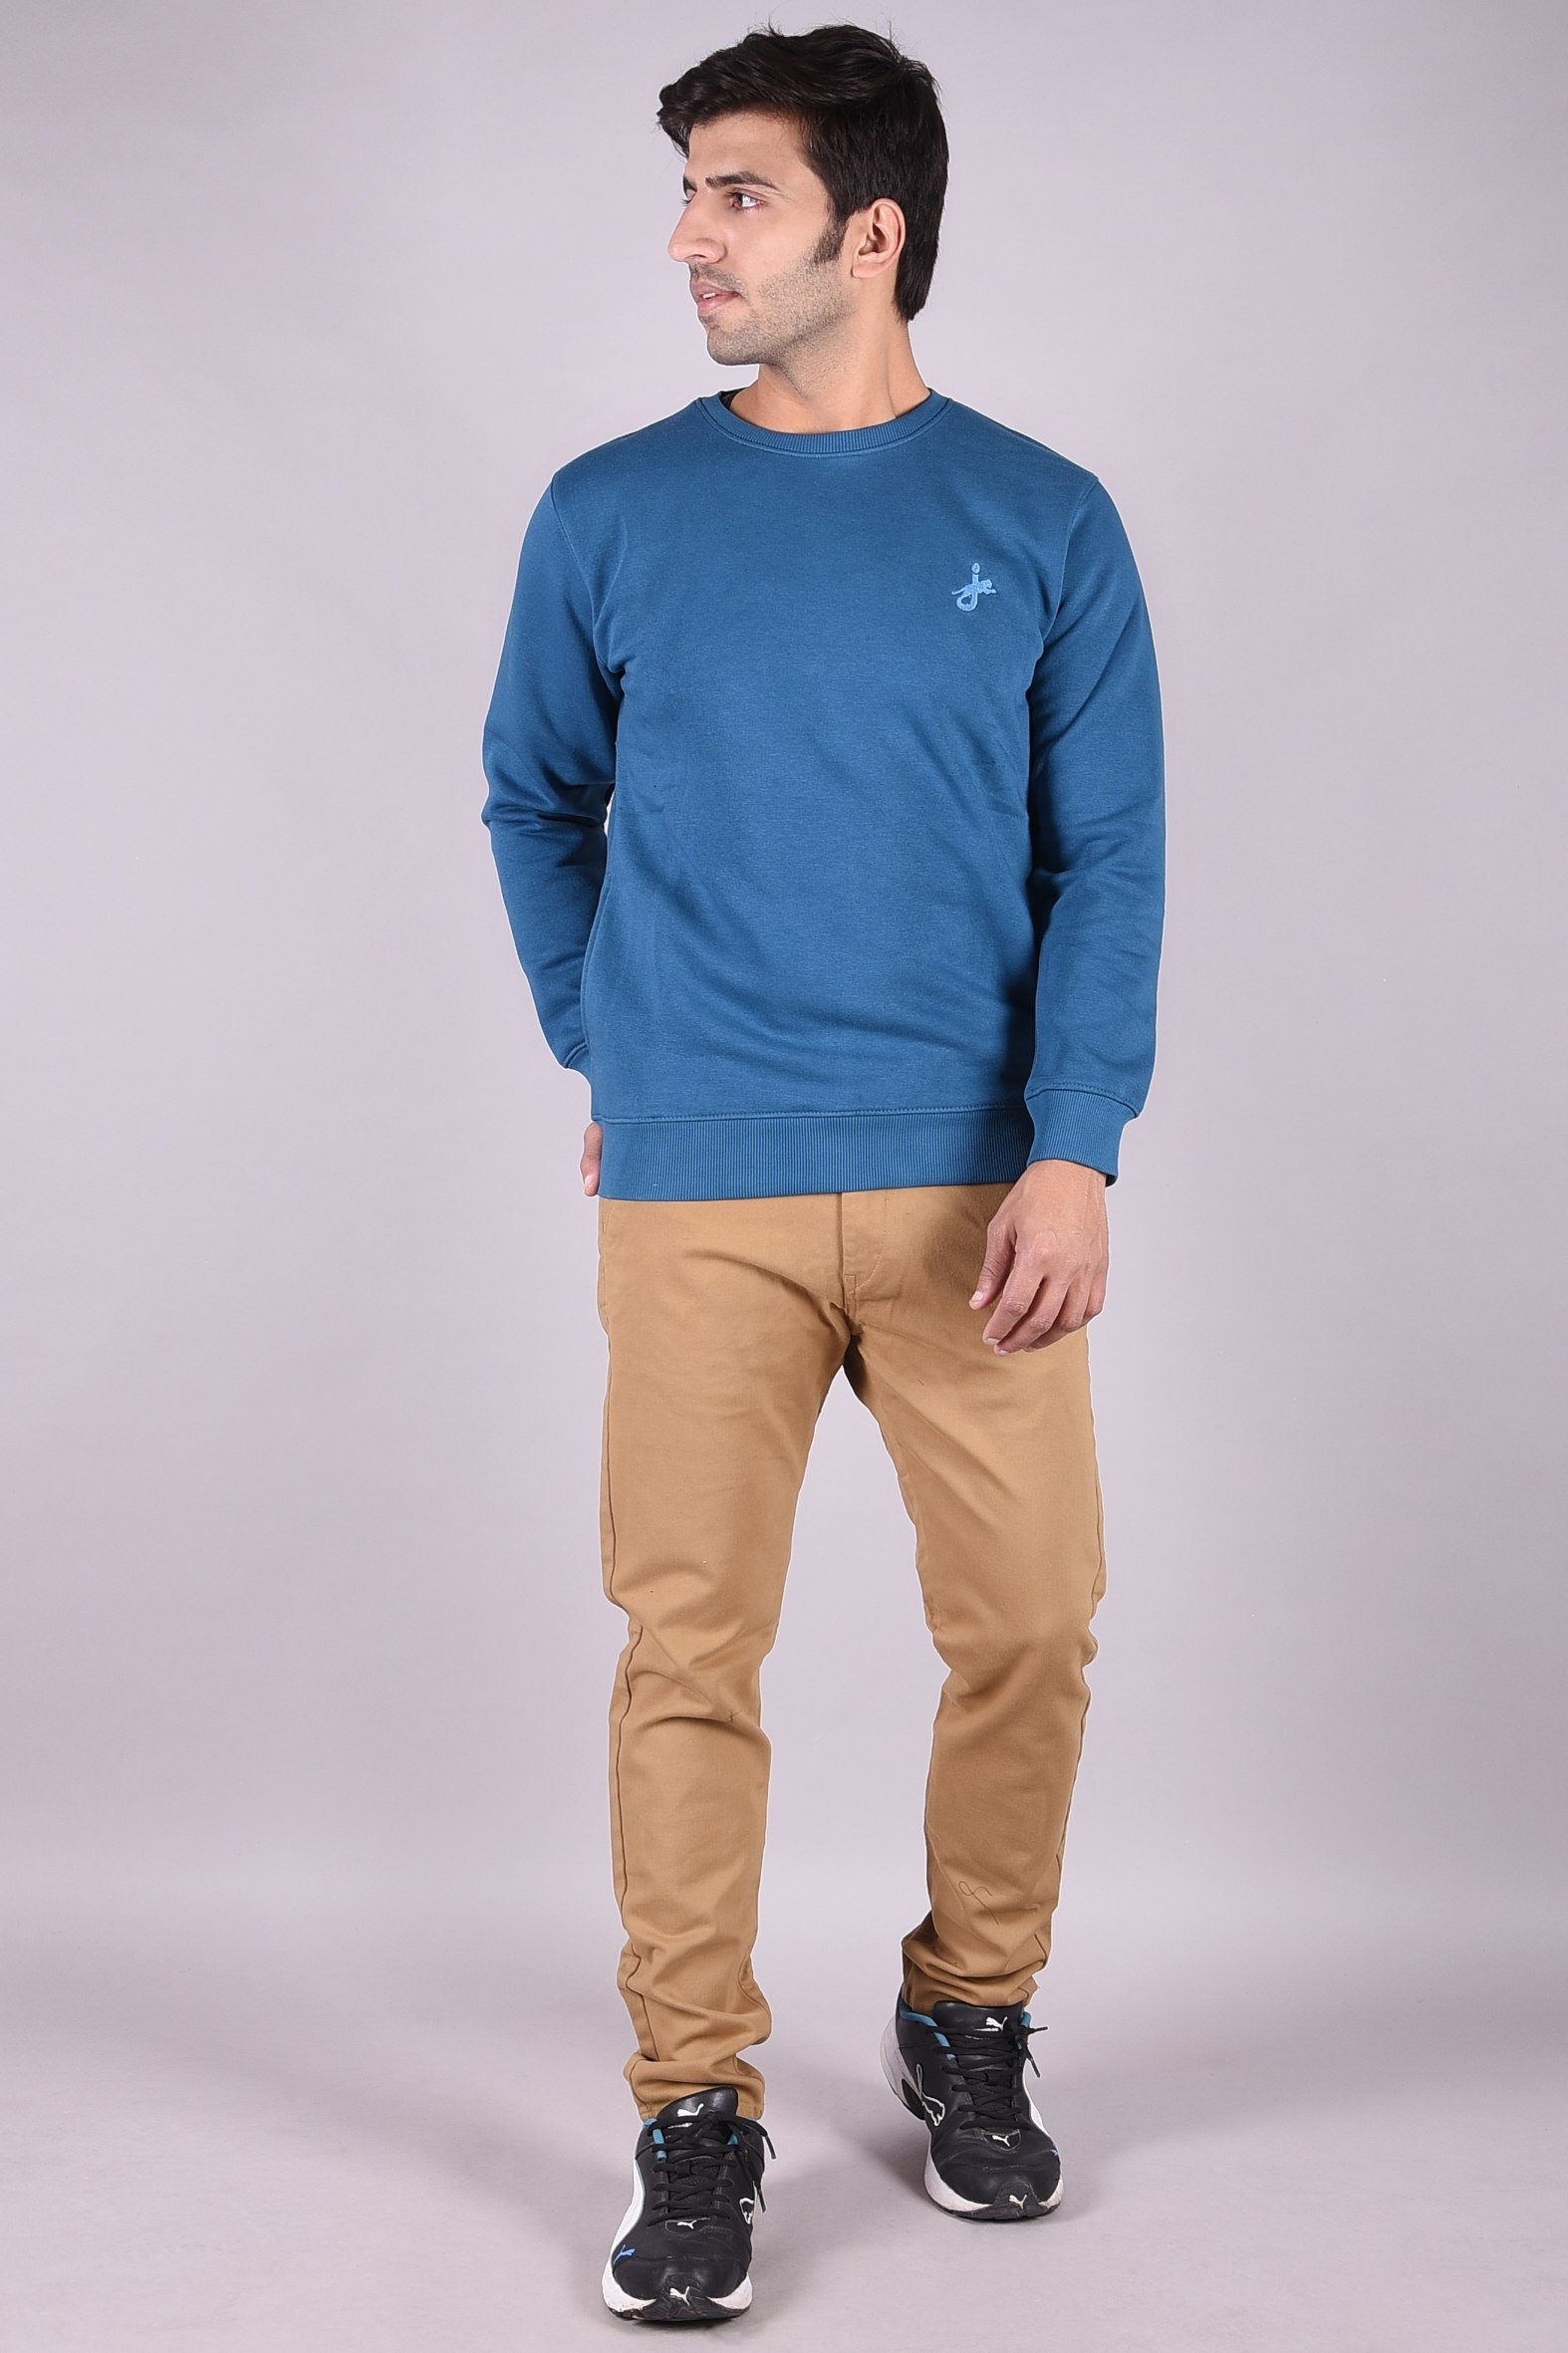 JAGURO | Trendy Men's Cotton Teal Blue SweatShirt